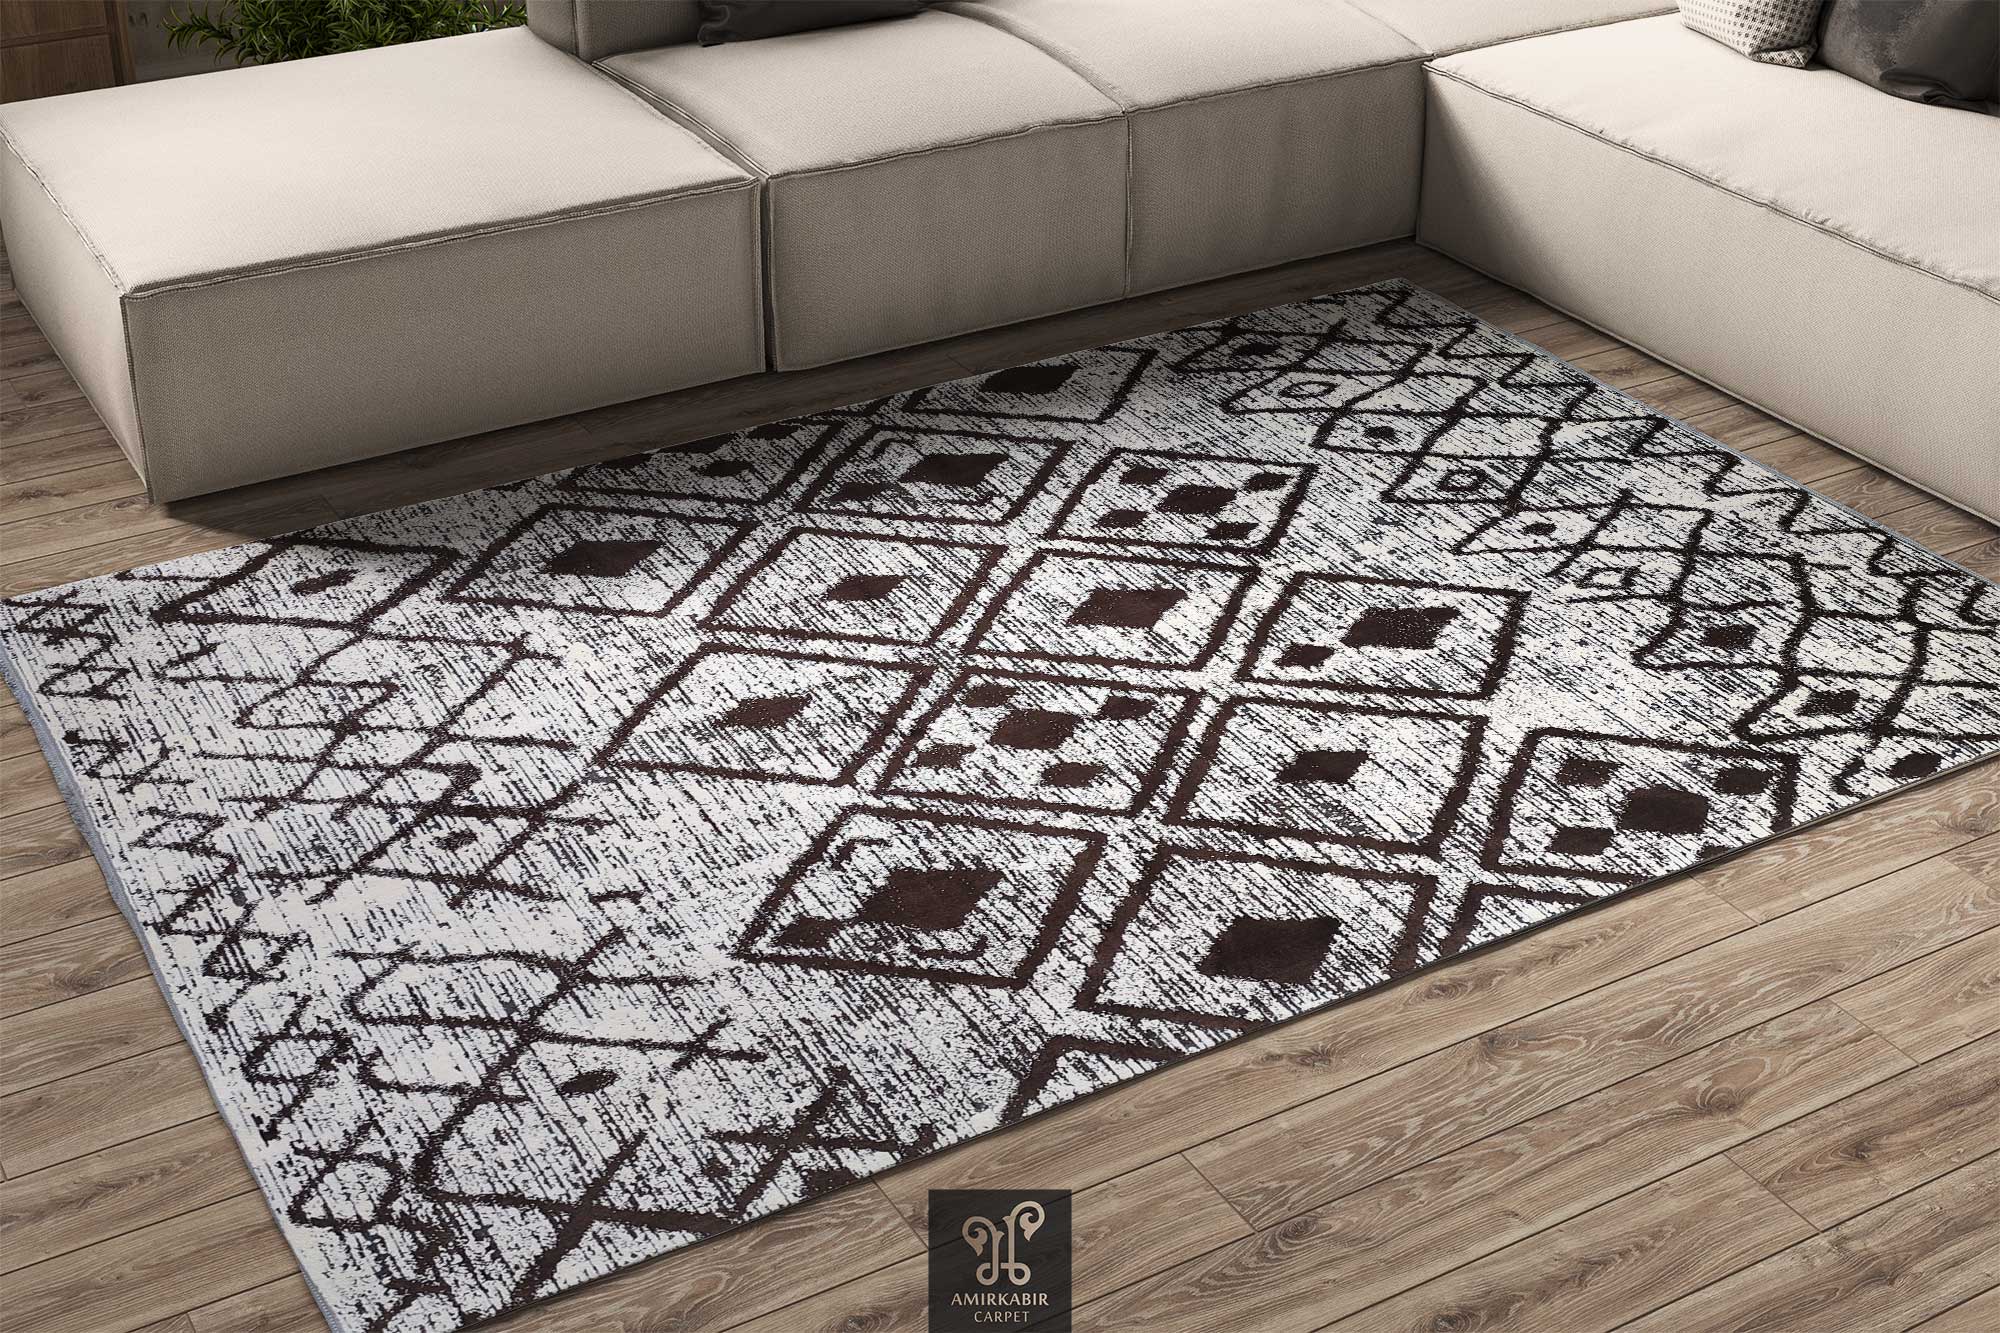 Vintage 400 reeds carpet -1400 Density RUG - Modern Carpet - Harmony Carpet 1194 Brown